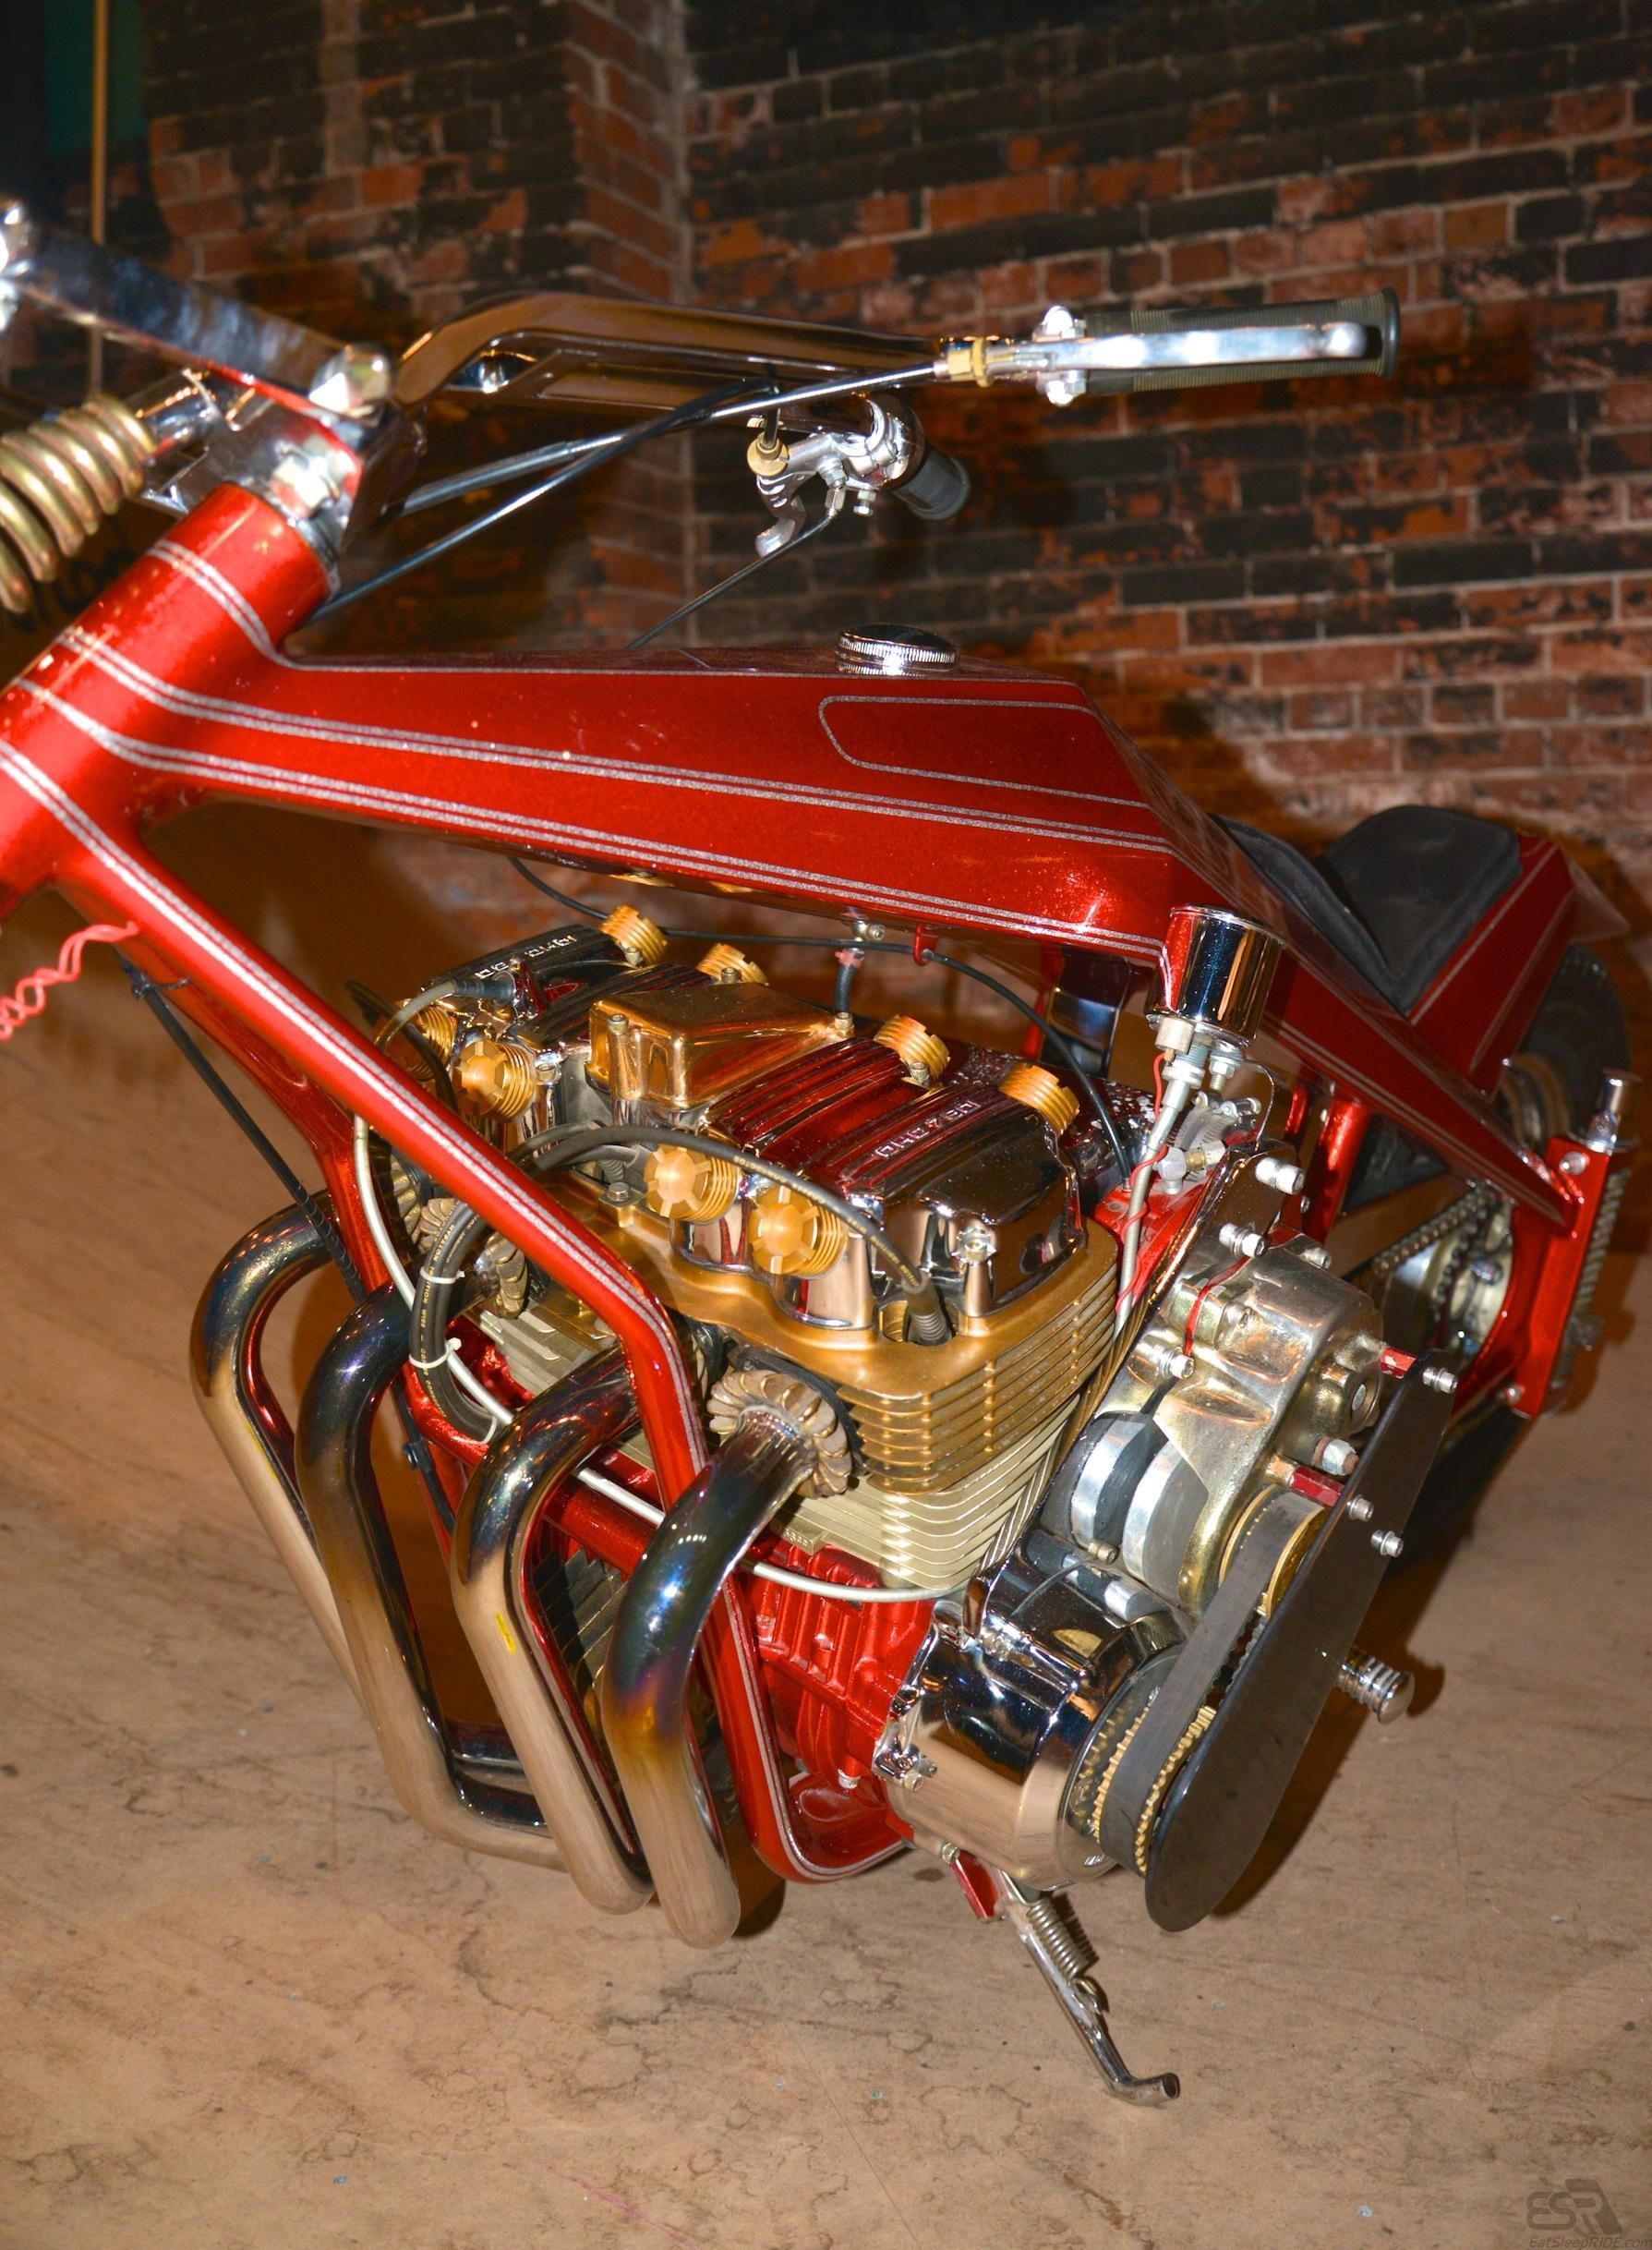 1975 gold plated vintage Honda engine by Doug Ahlers